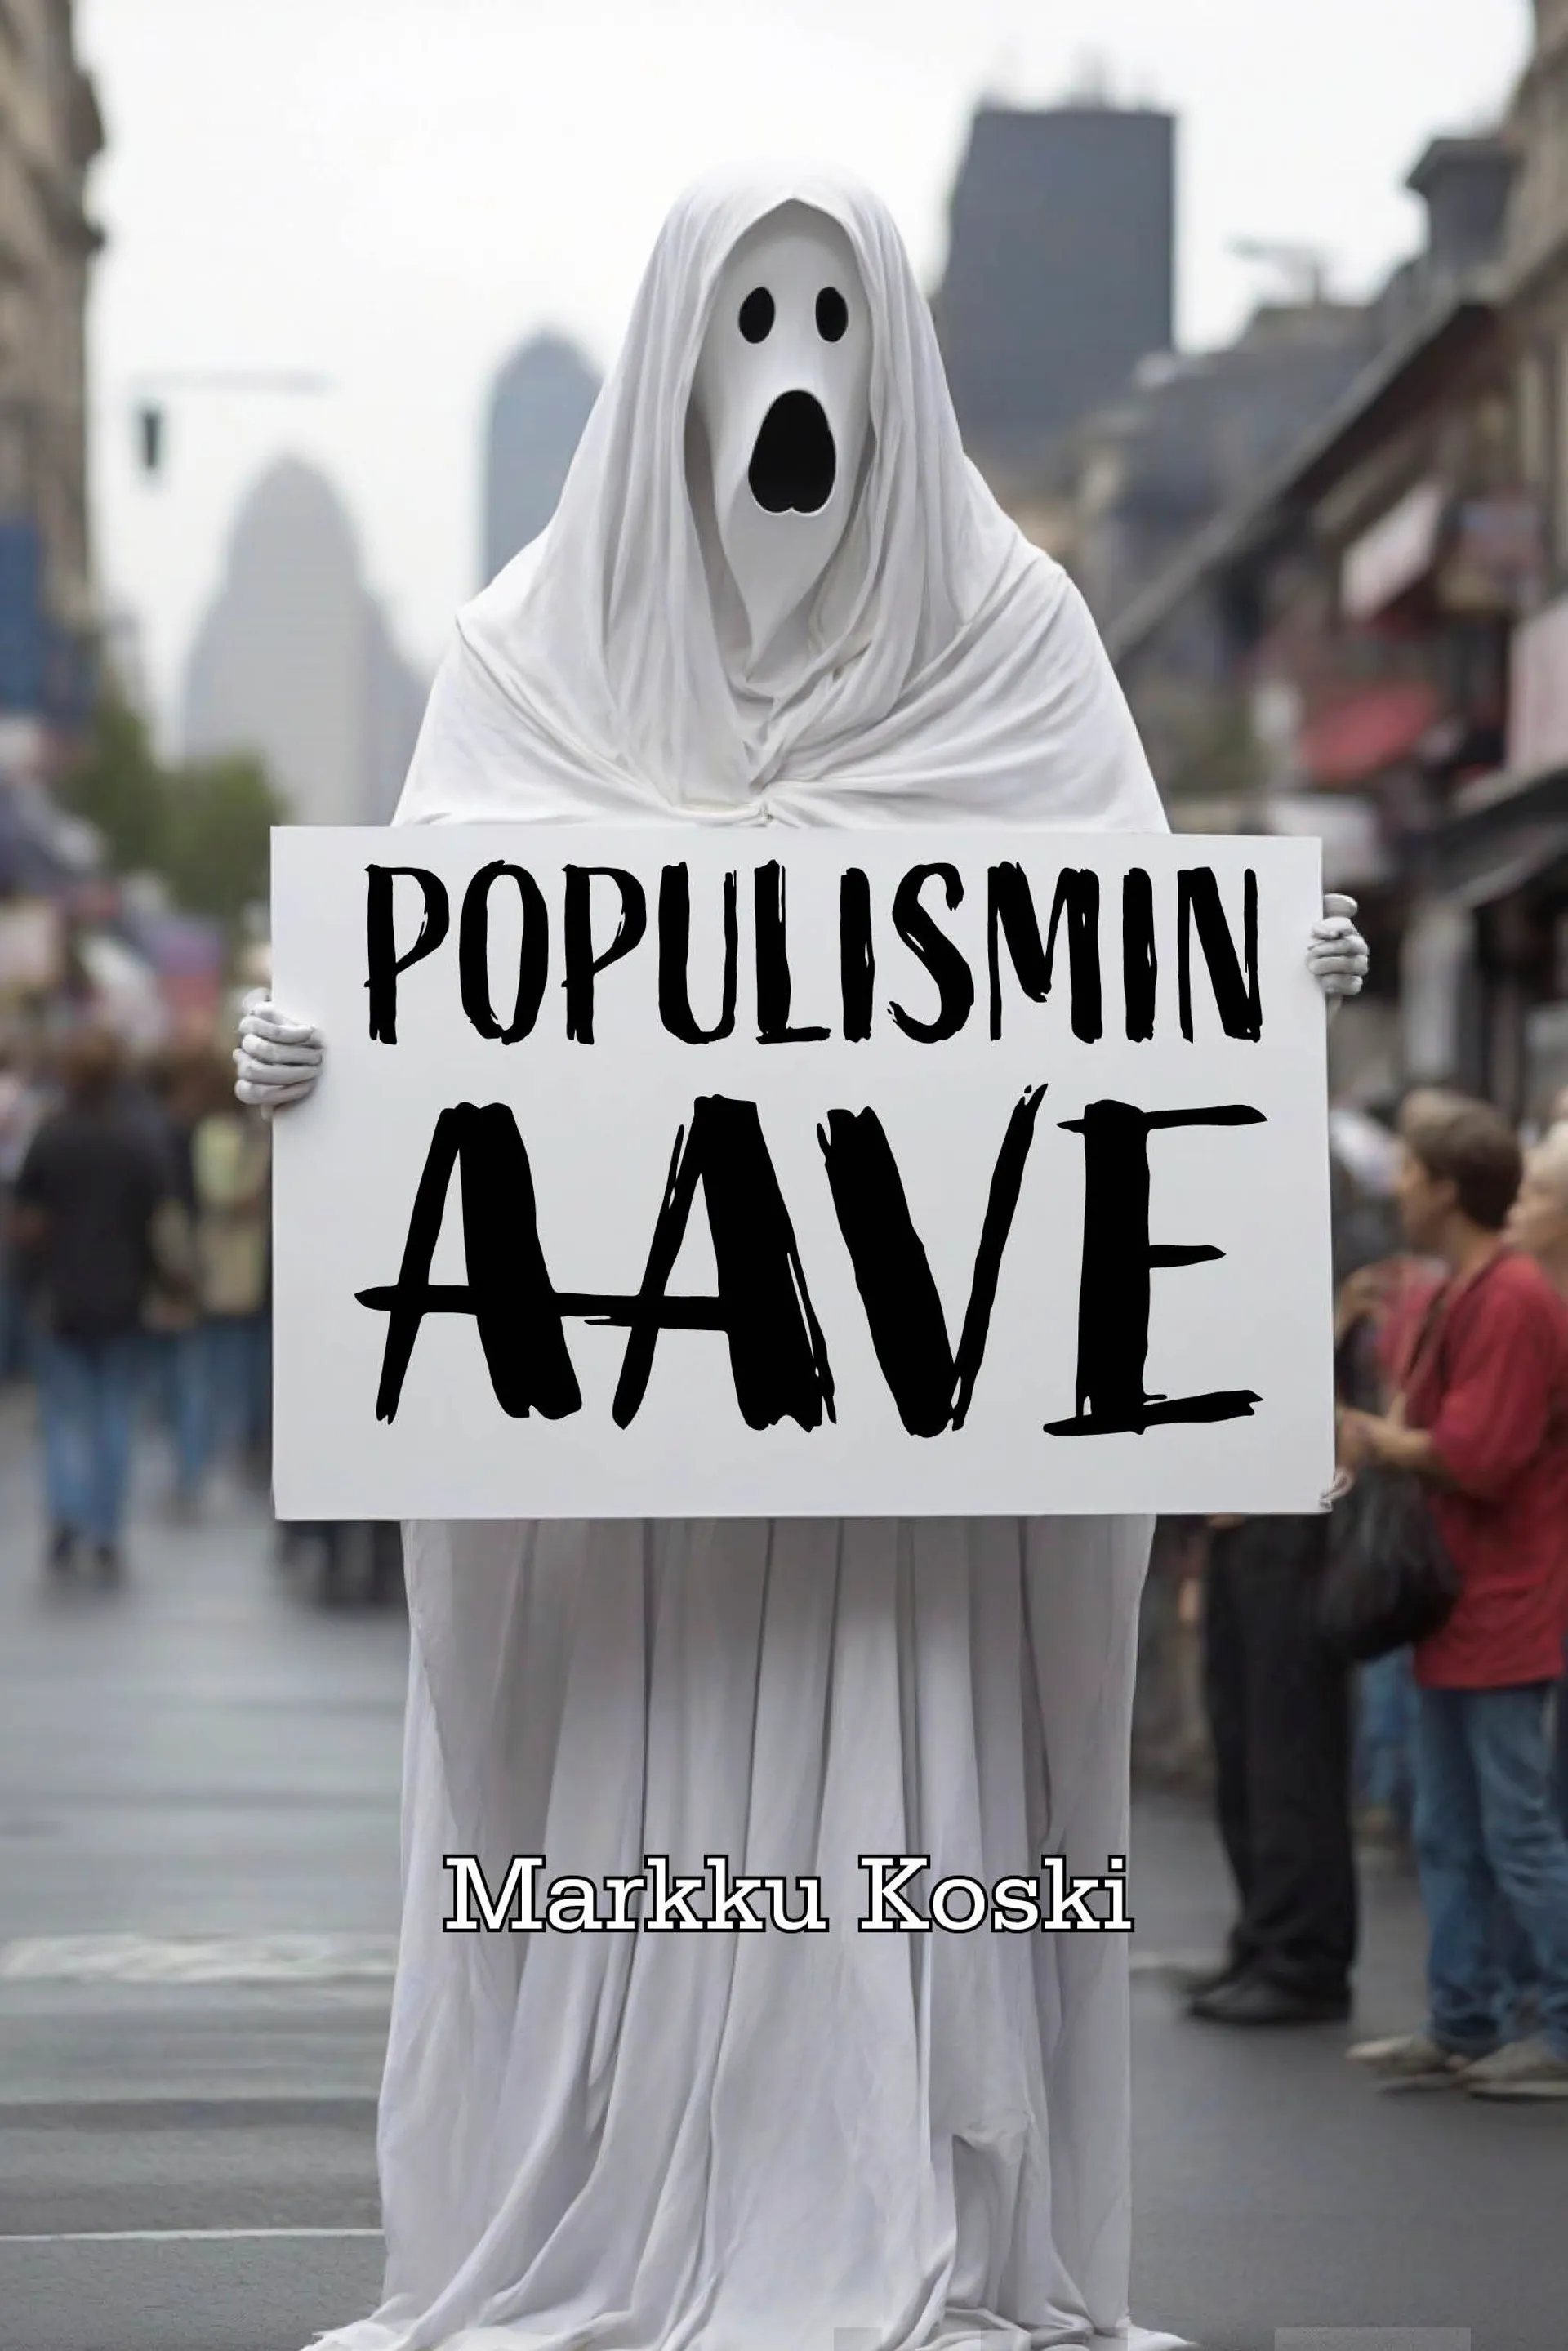 Koski, Populismin aave